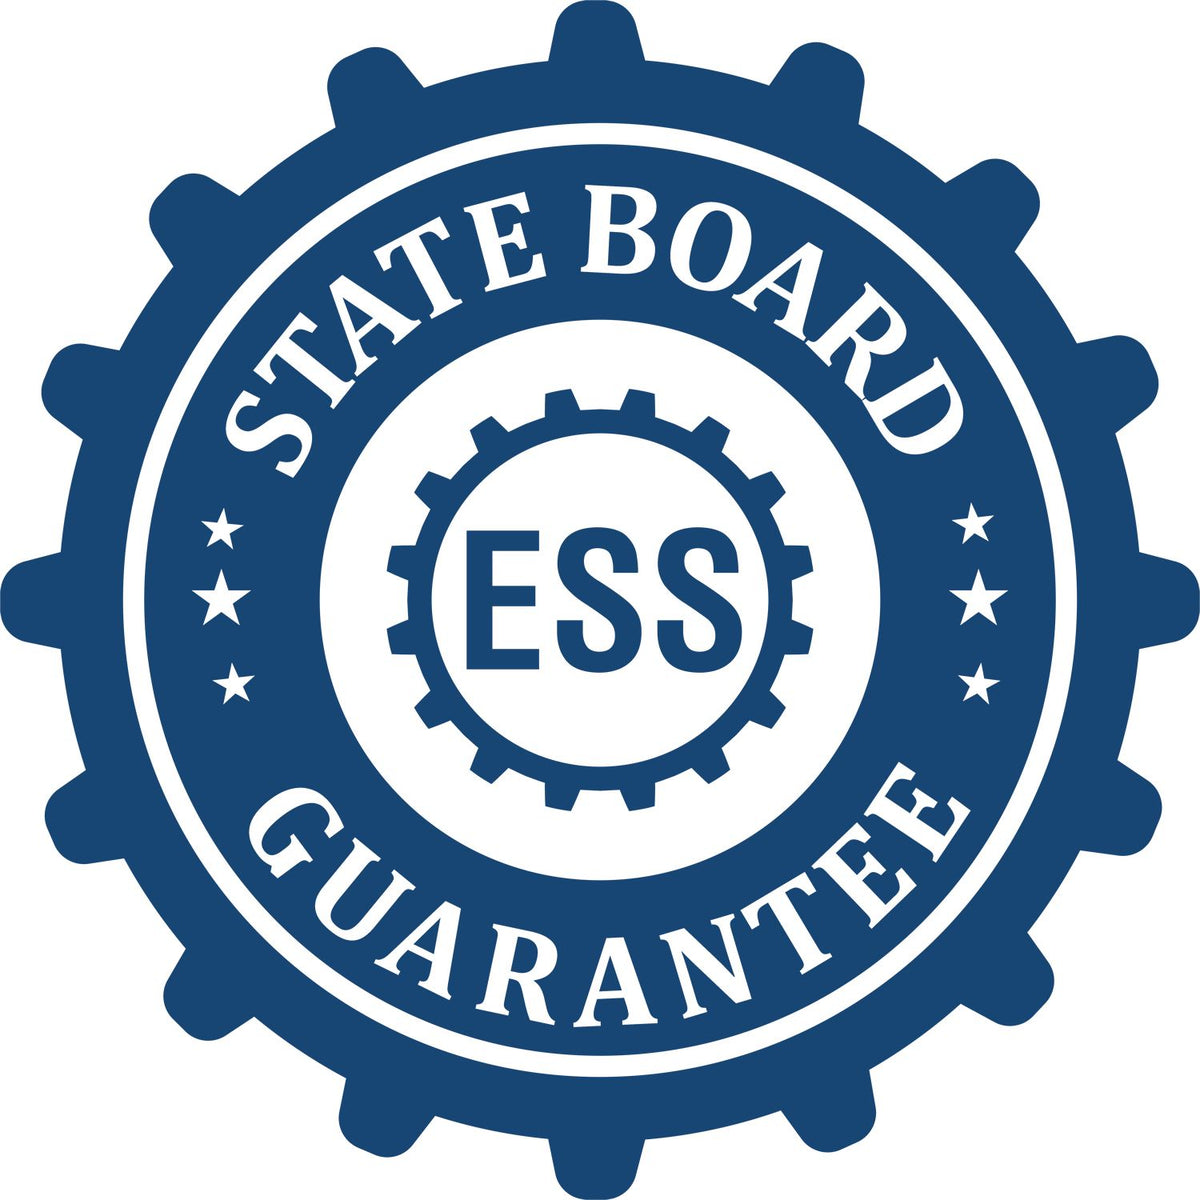 An emblem in a gear shape illustrating a state board guarantee for the Hybrid South Carolina Land Surveyor Seal